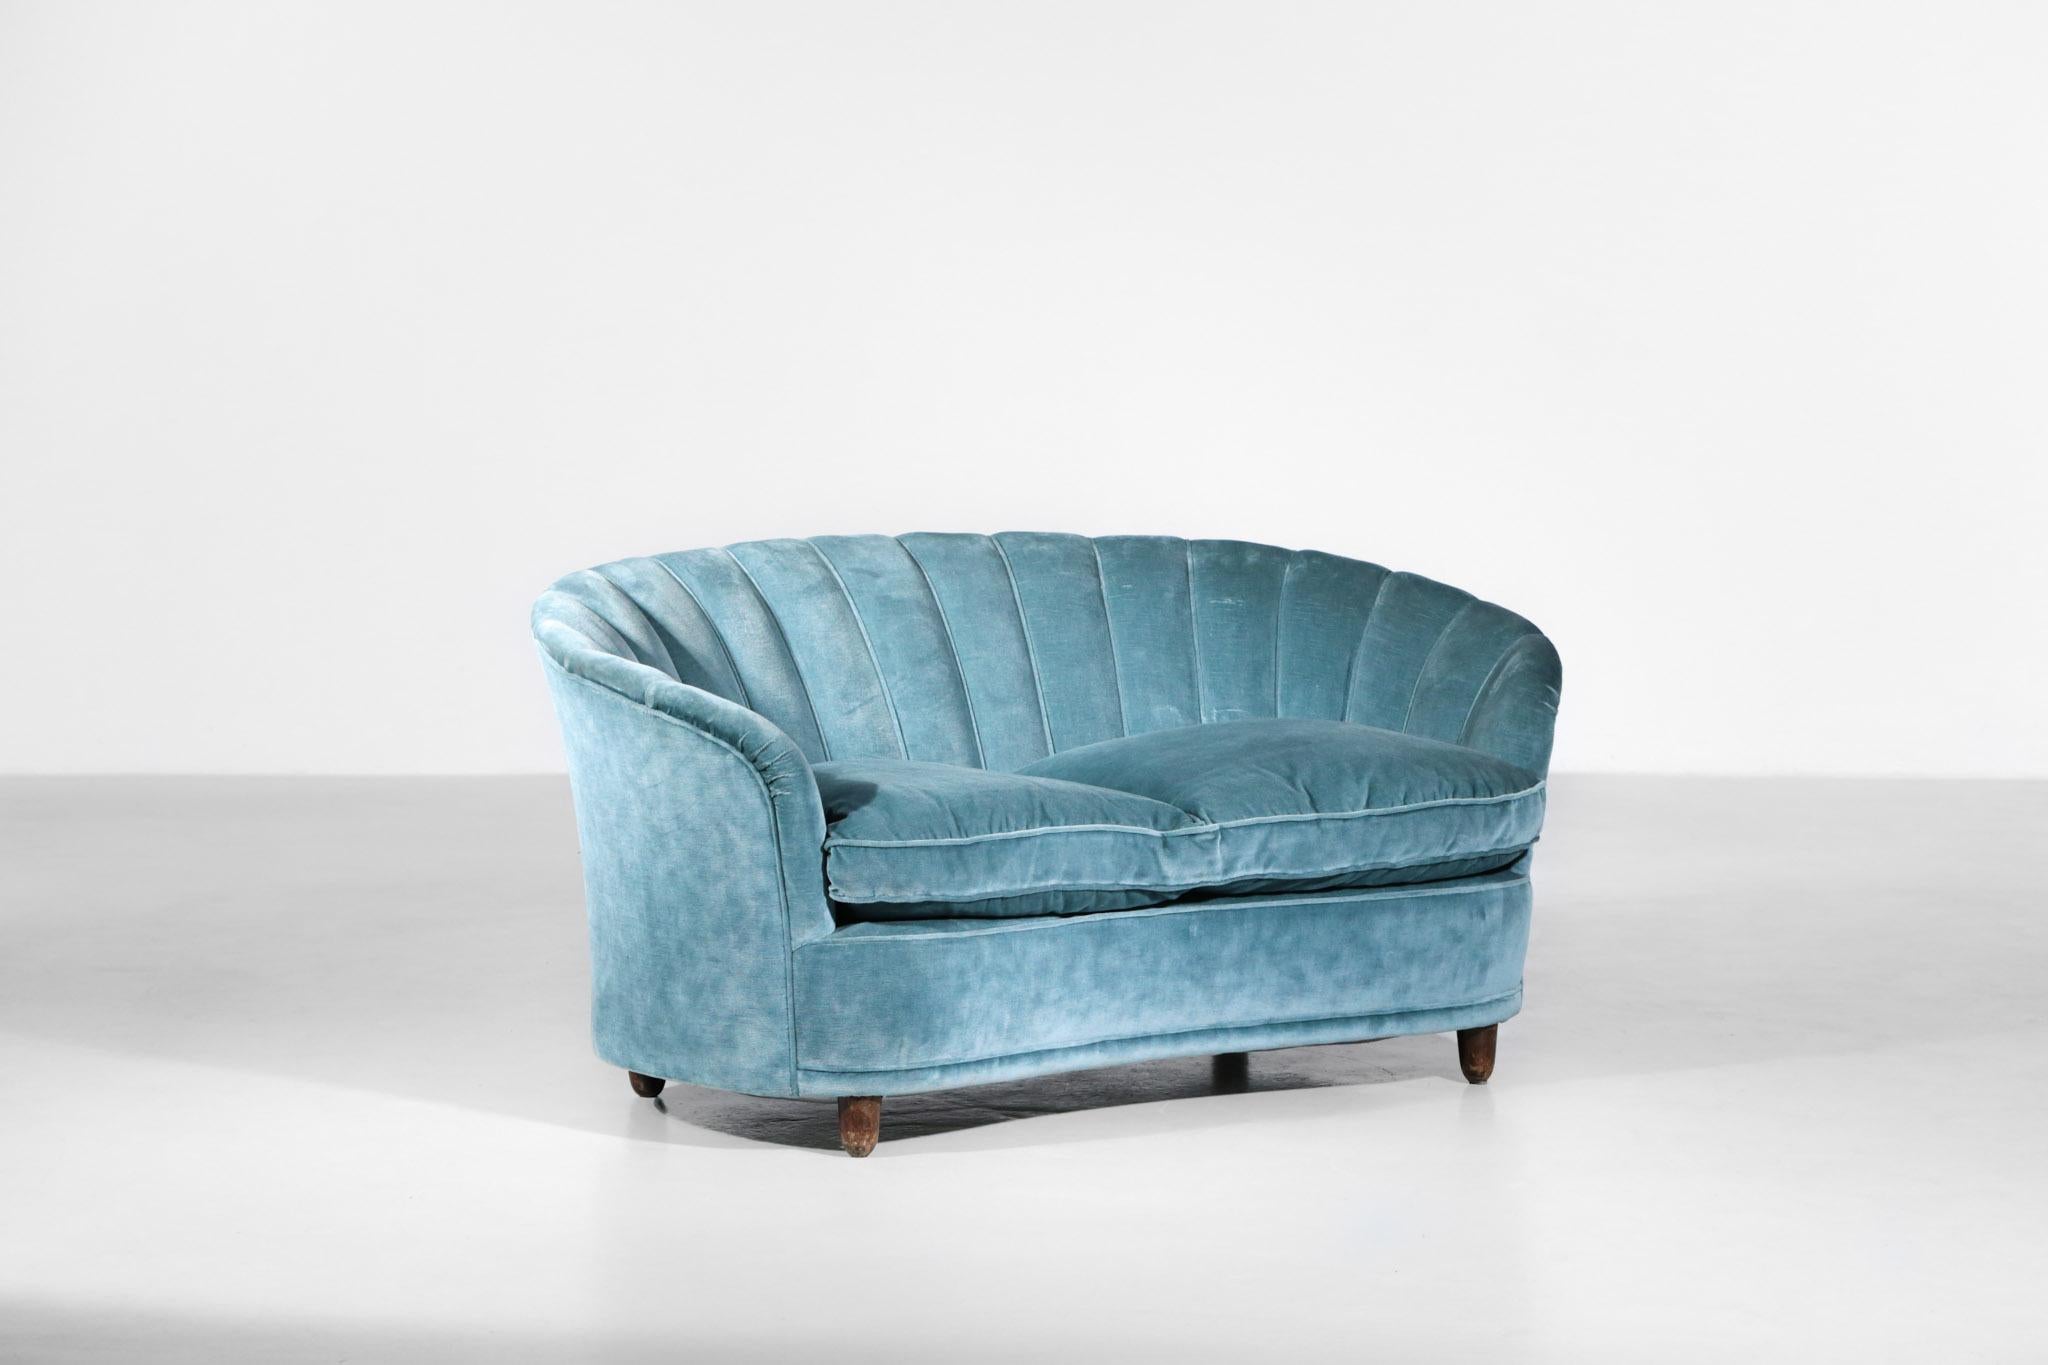 Mid-Century Modern Italian Sofa by Gio Ponti Design 1960s Velvet Vintage Designer 2 Seat